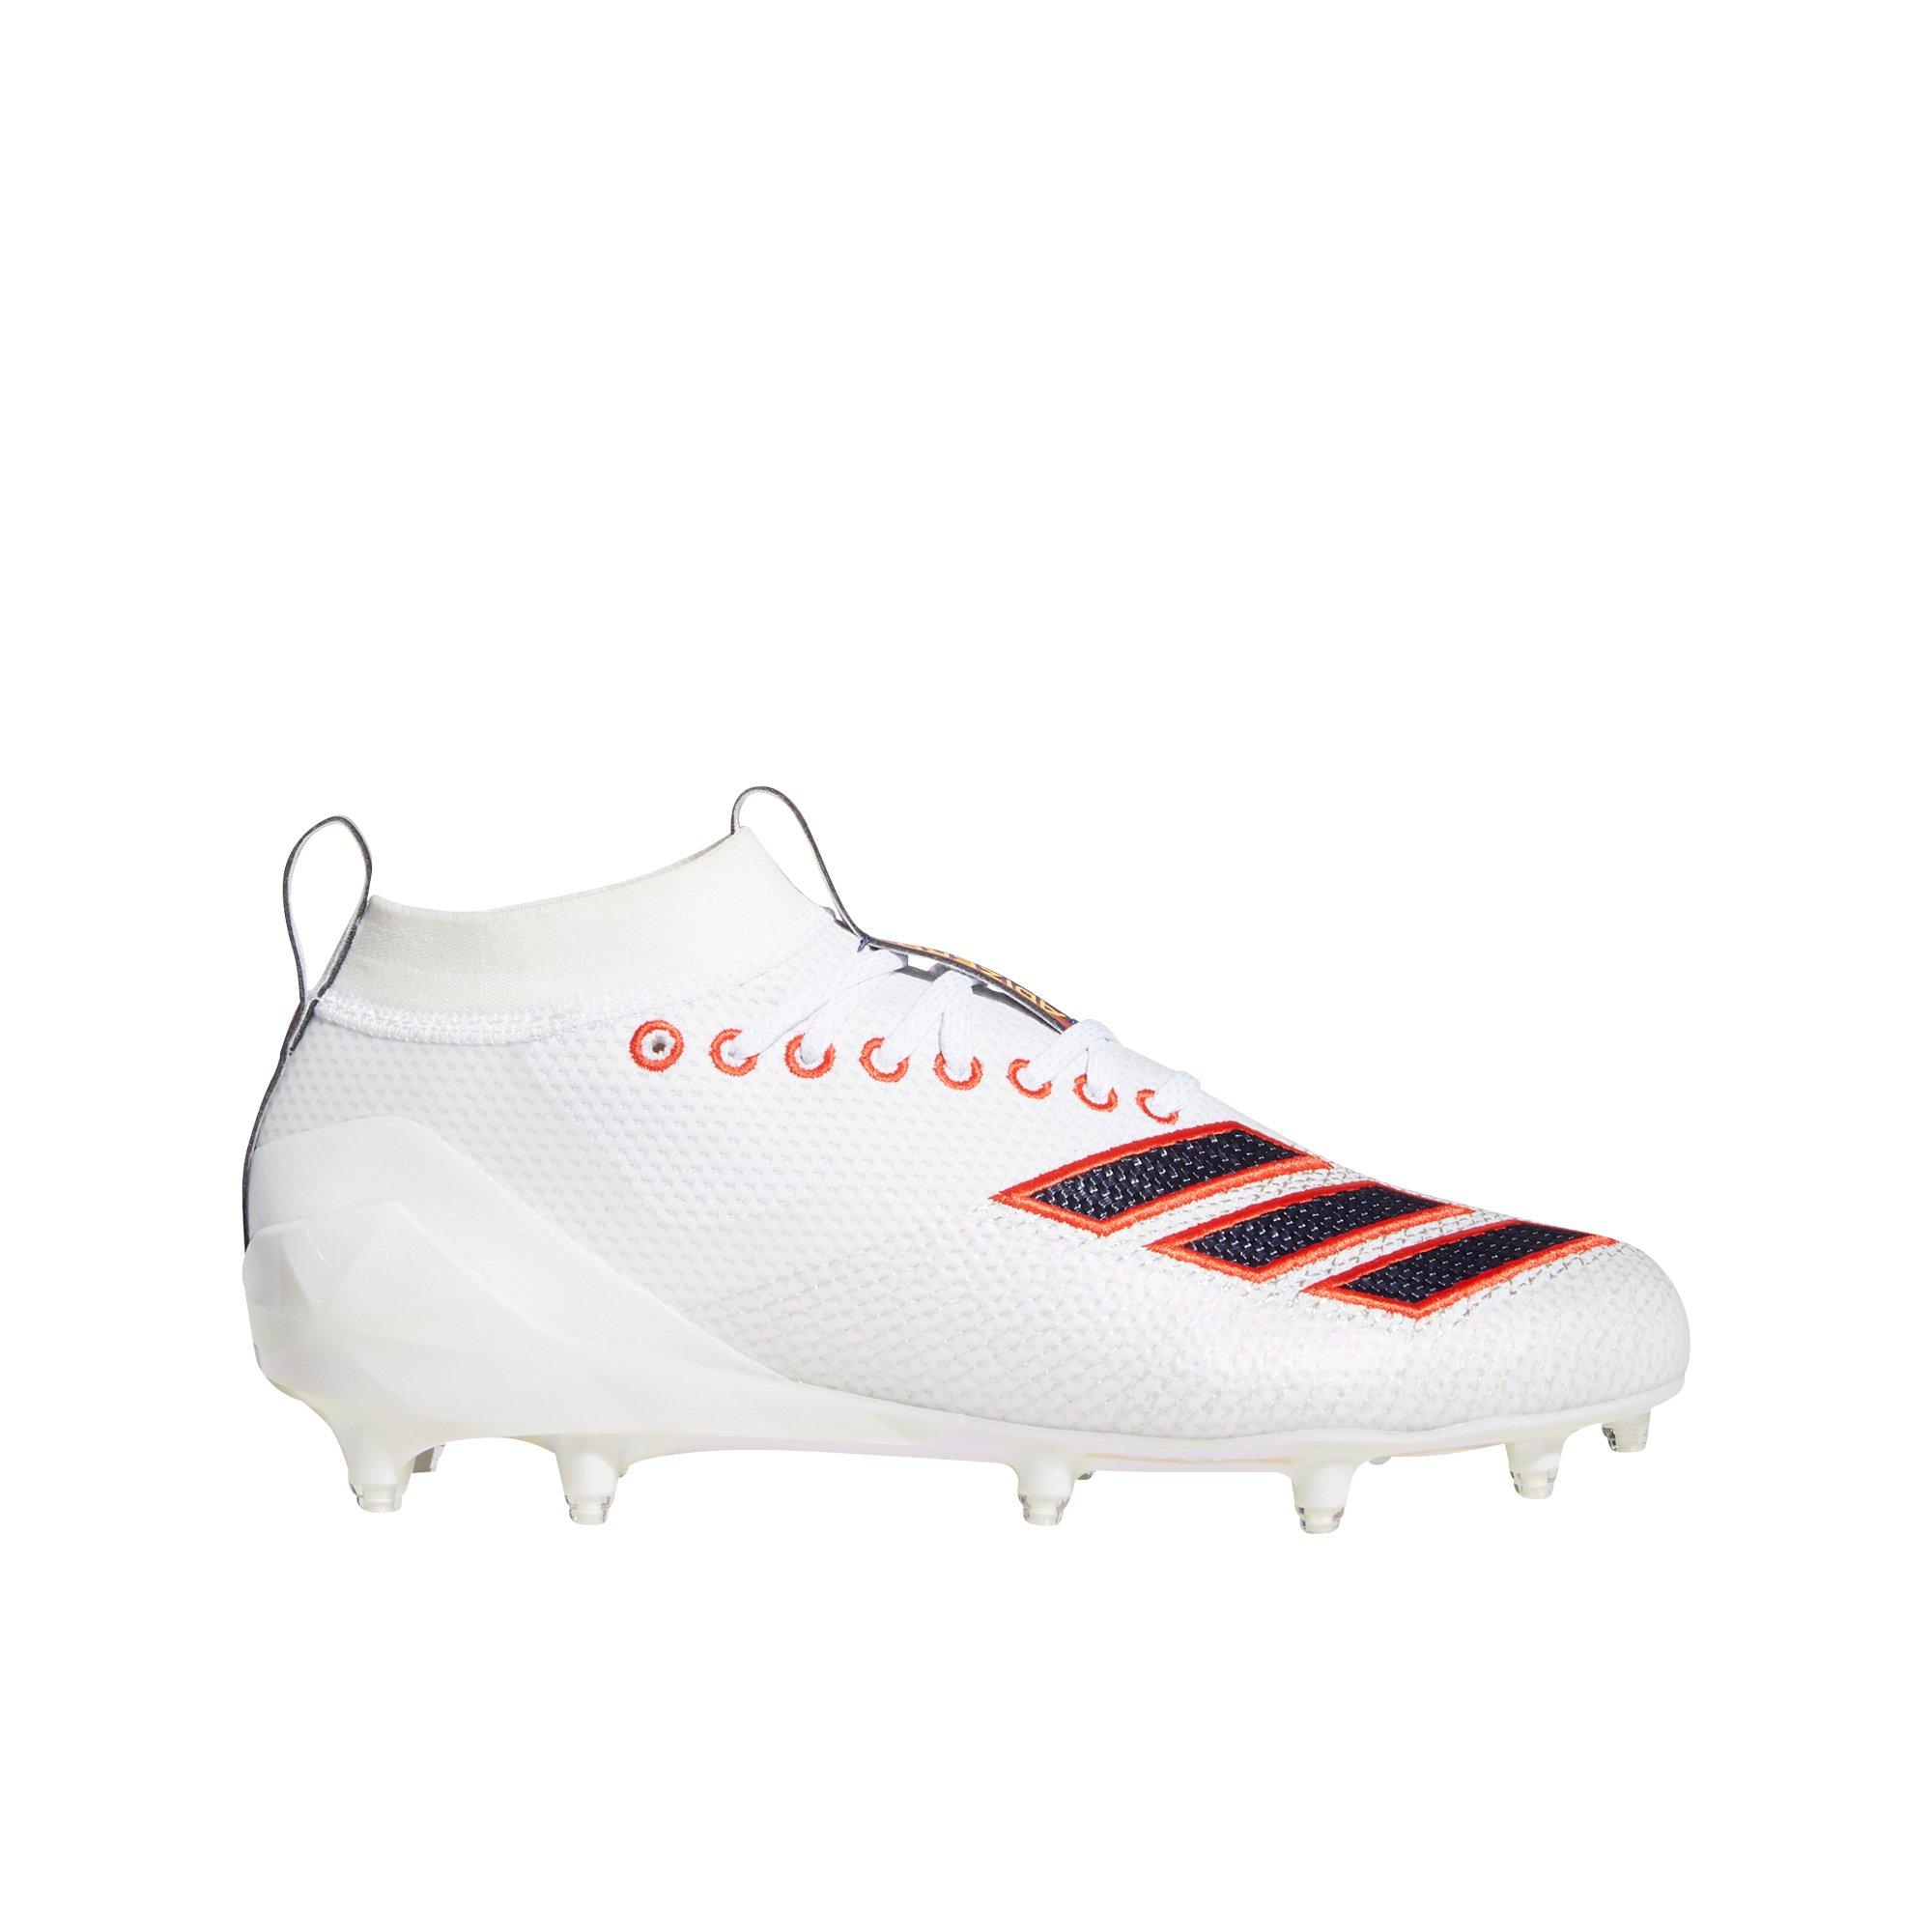 men's adizero 8.0 football shoe